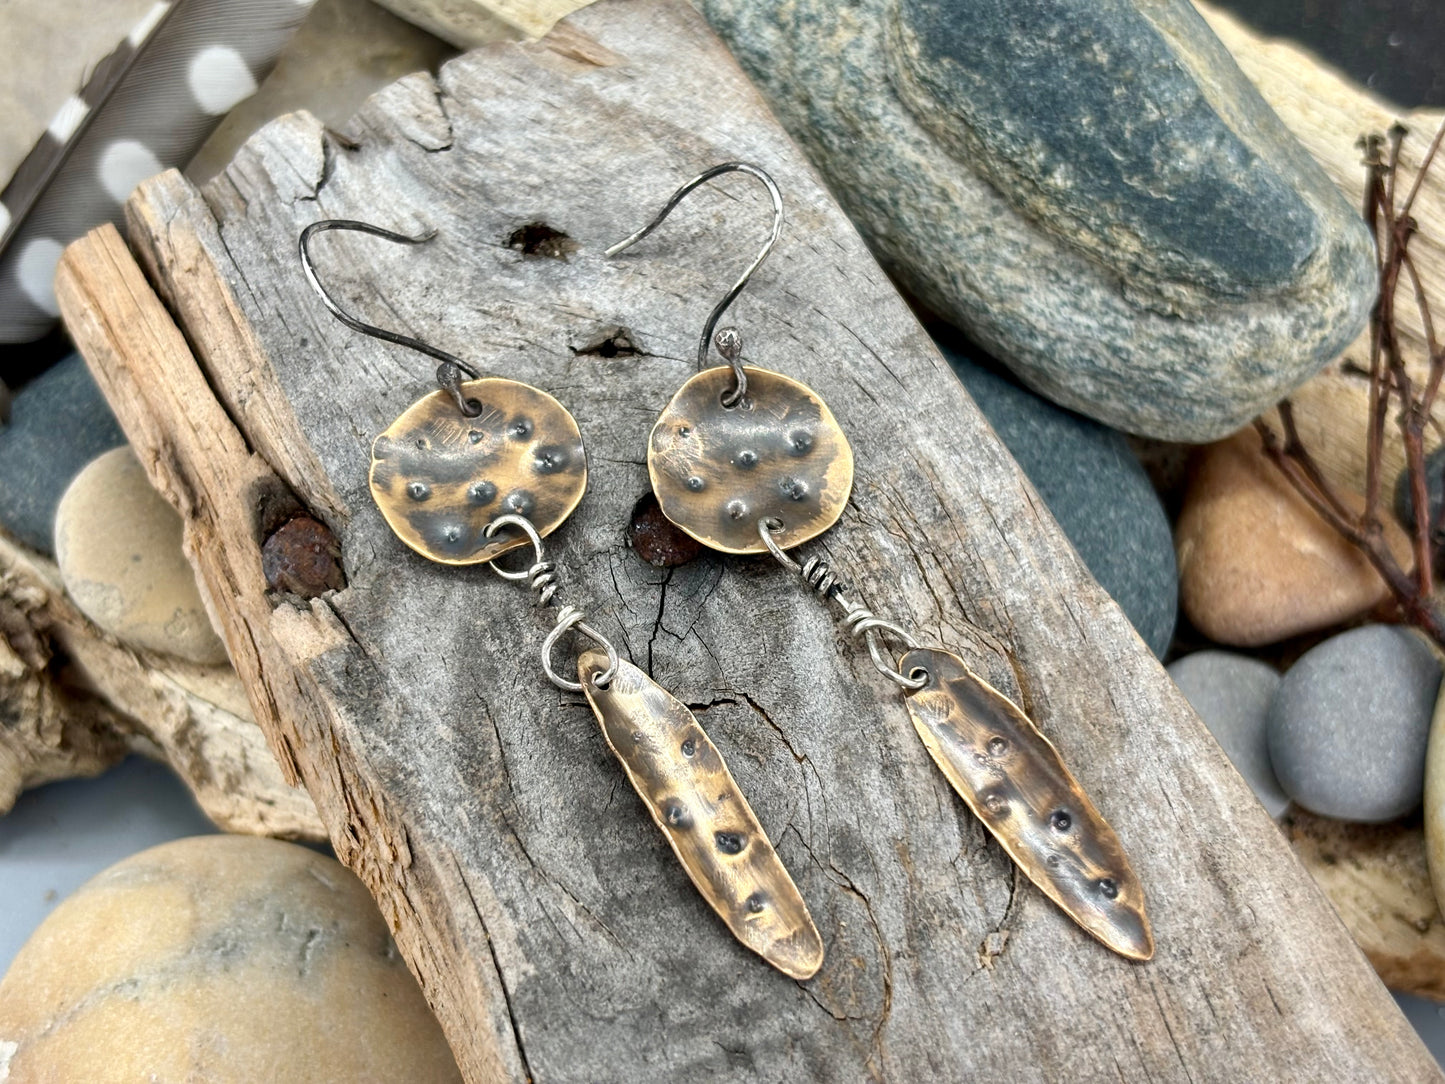 Metal Formed Forged Stamped Dangling Earrings
# 6